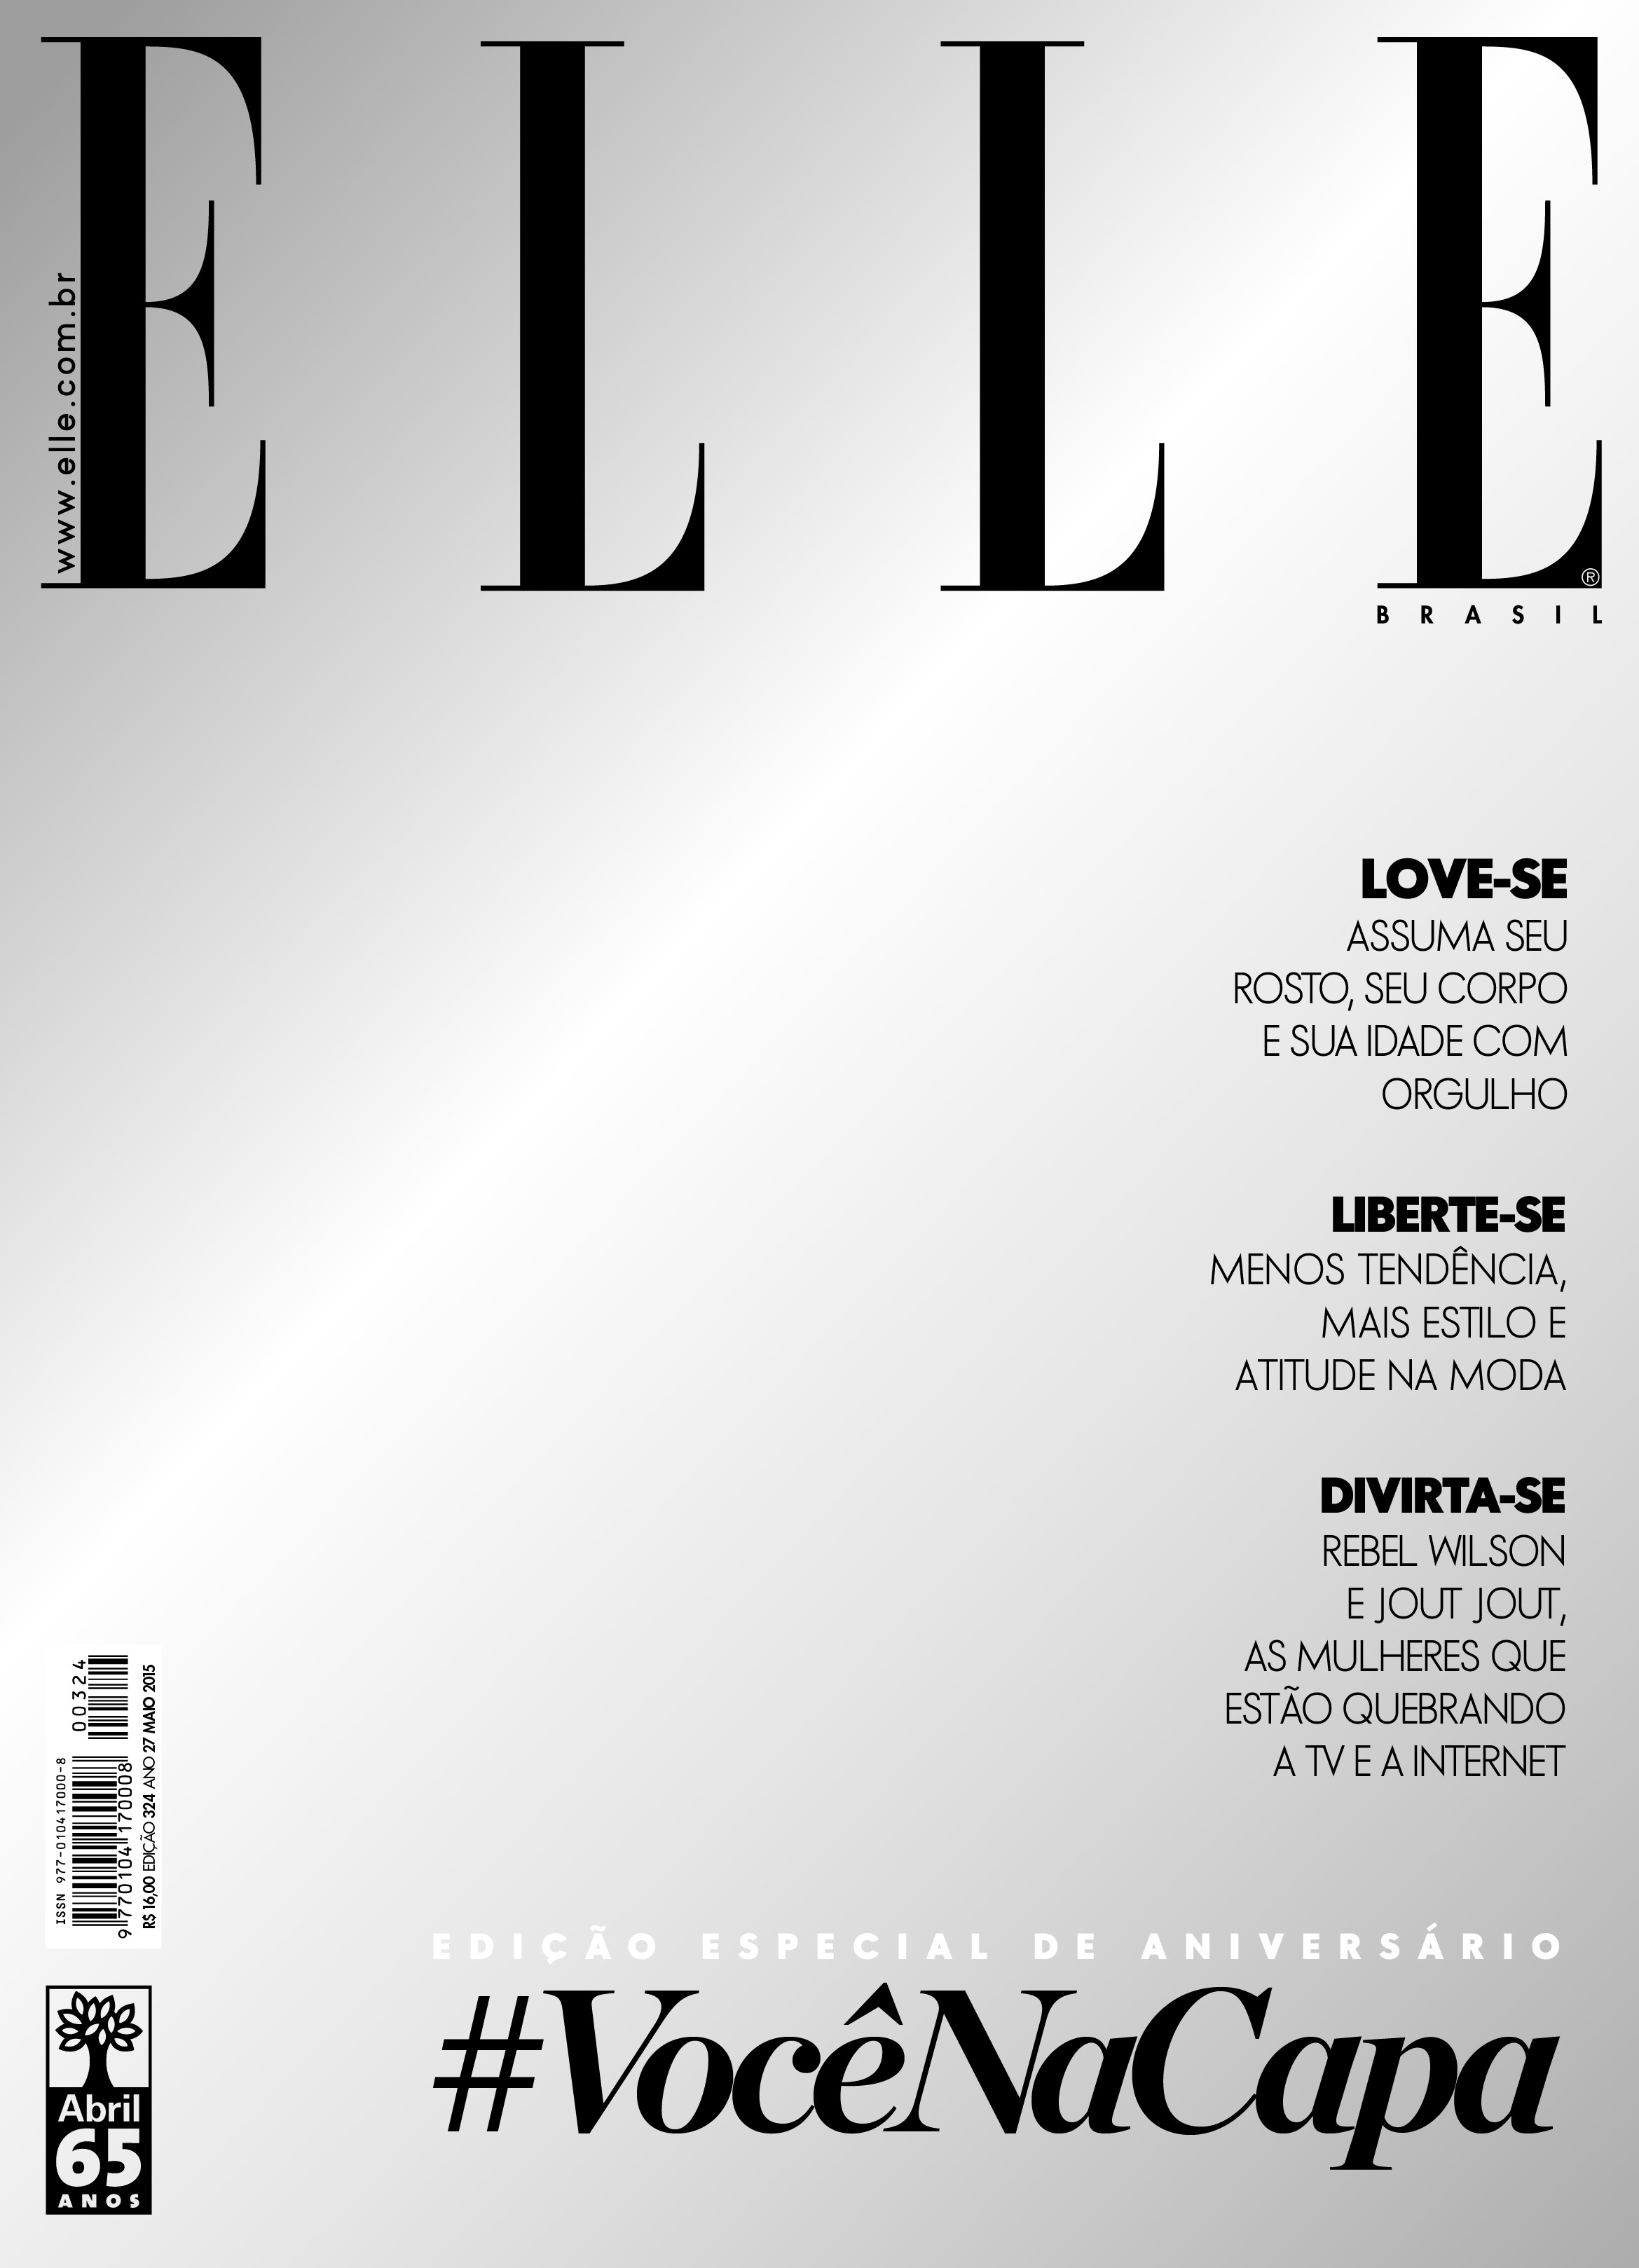 ELLE Brasil on X: ✨As capas da ELLE impressa de dezembro